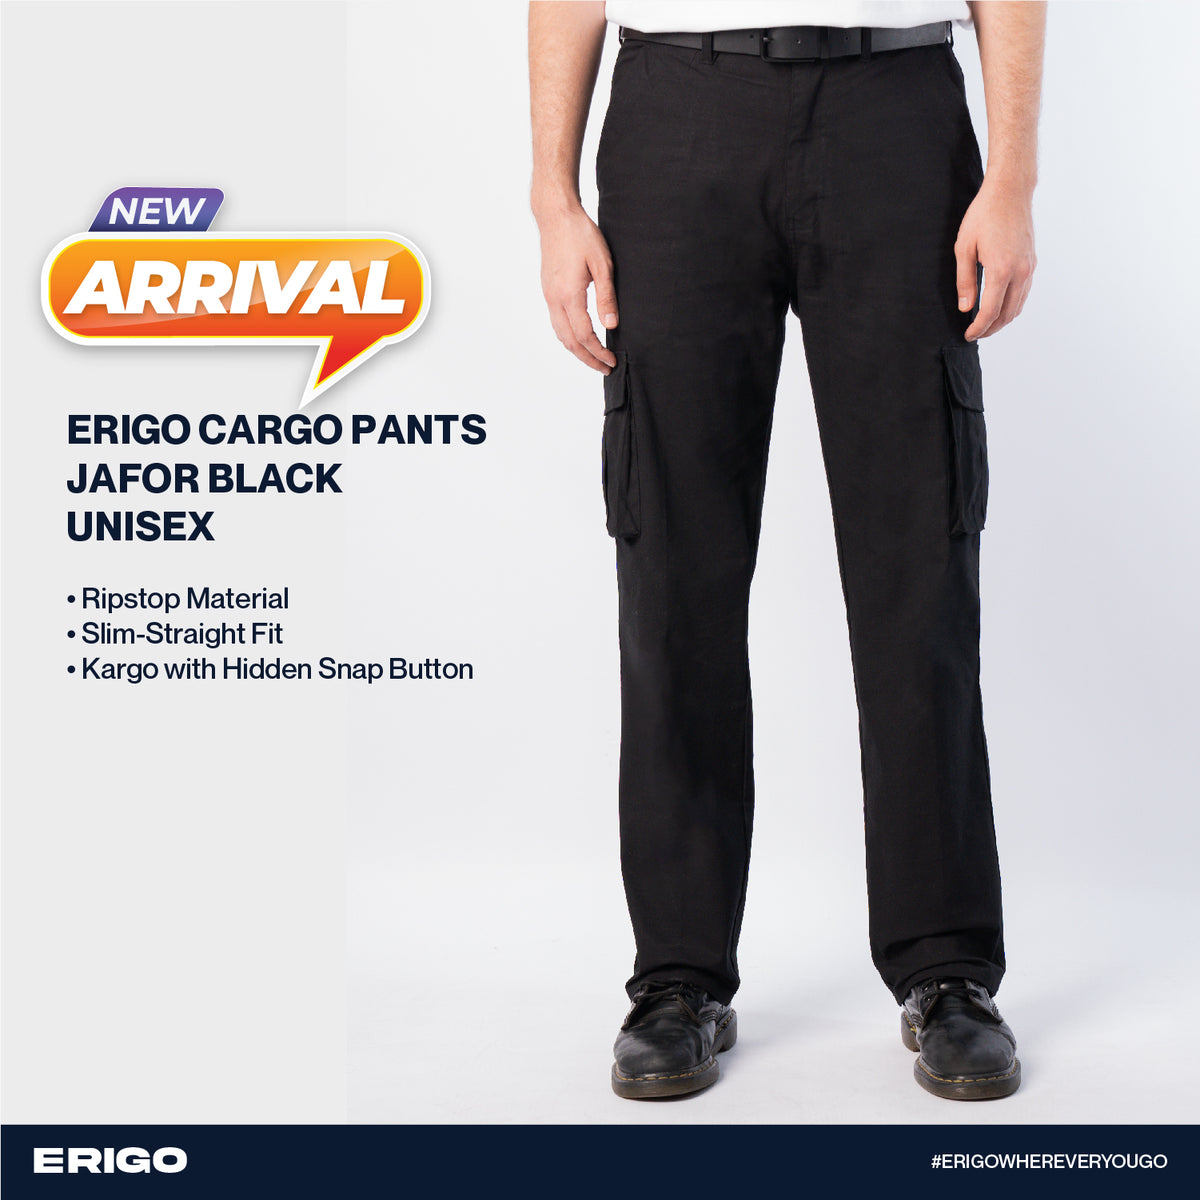 Erigo Cargo Pants Jafor Black Unisex